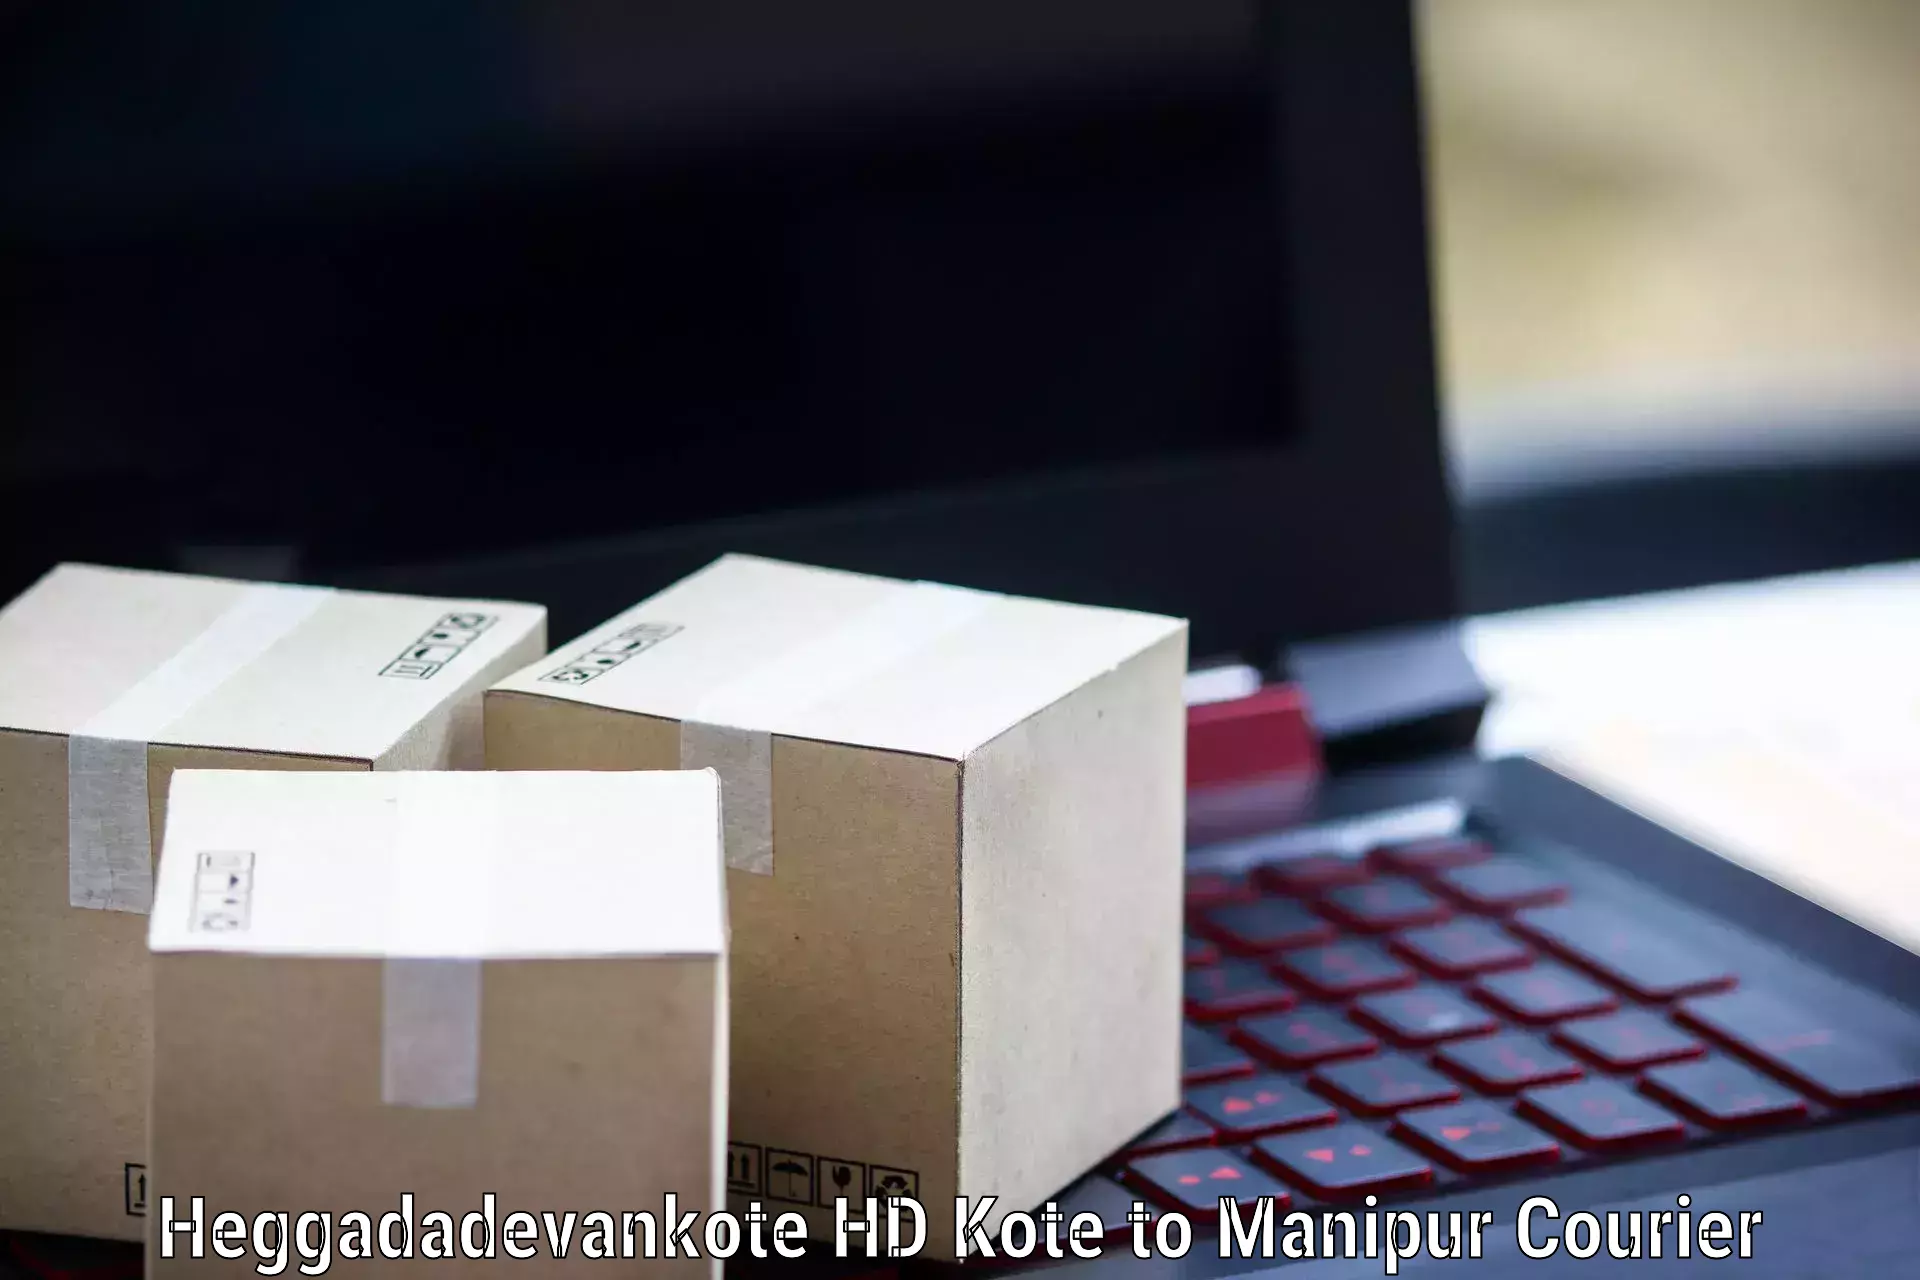 Courier app Heggadadevankote HD Kote to Manipur